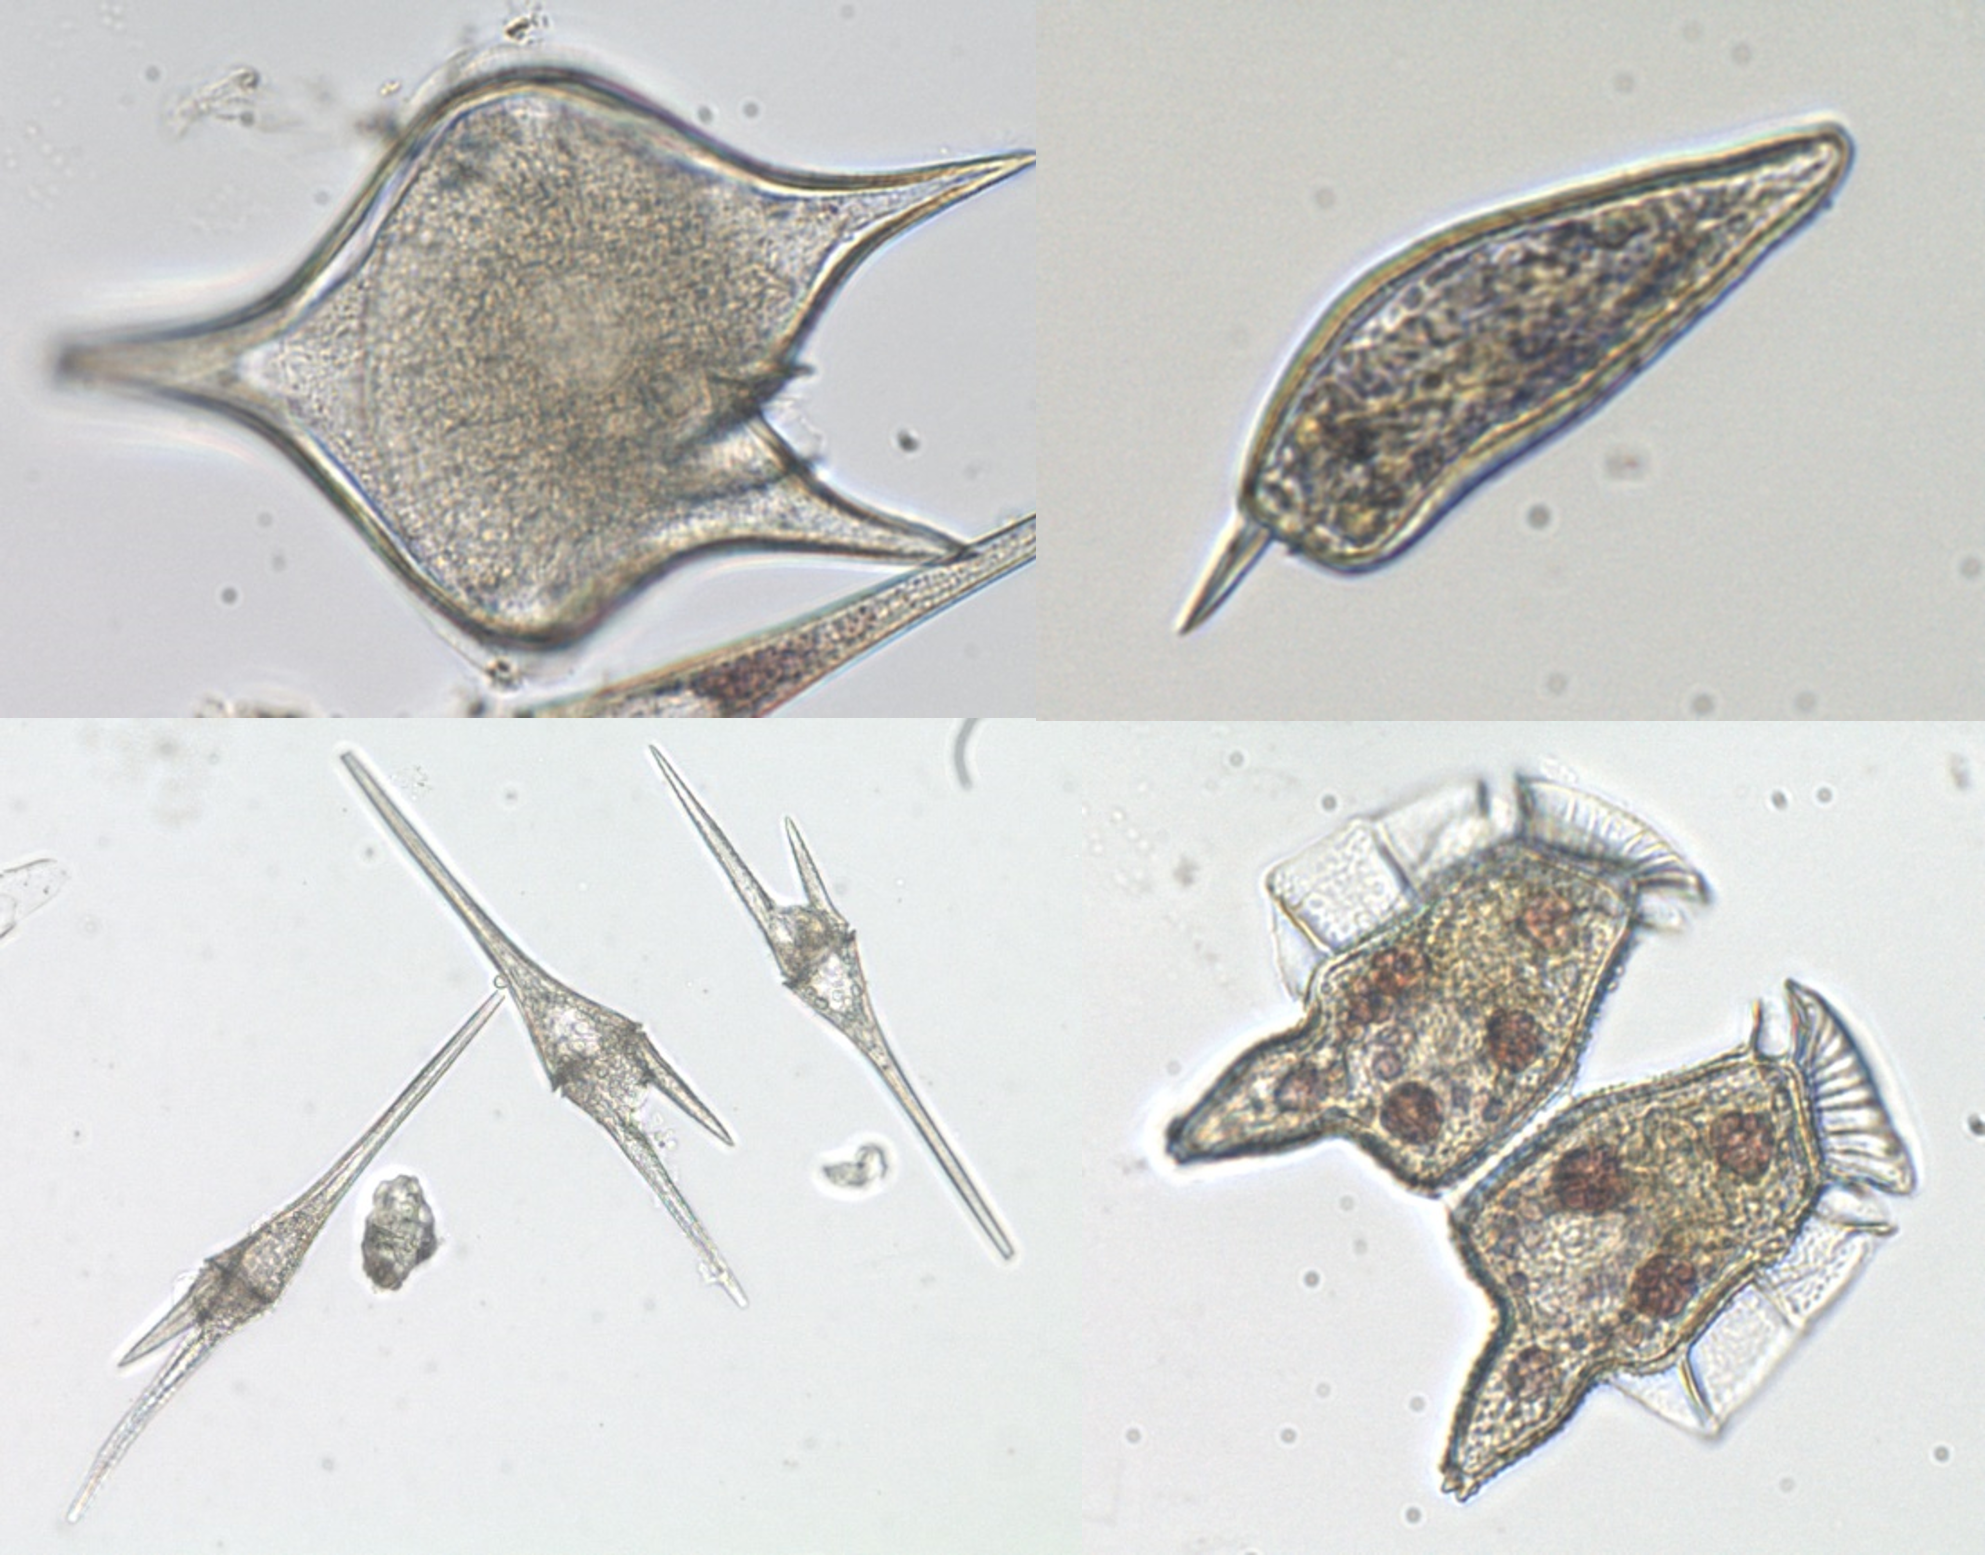 Microscopic images of dinoflagellates